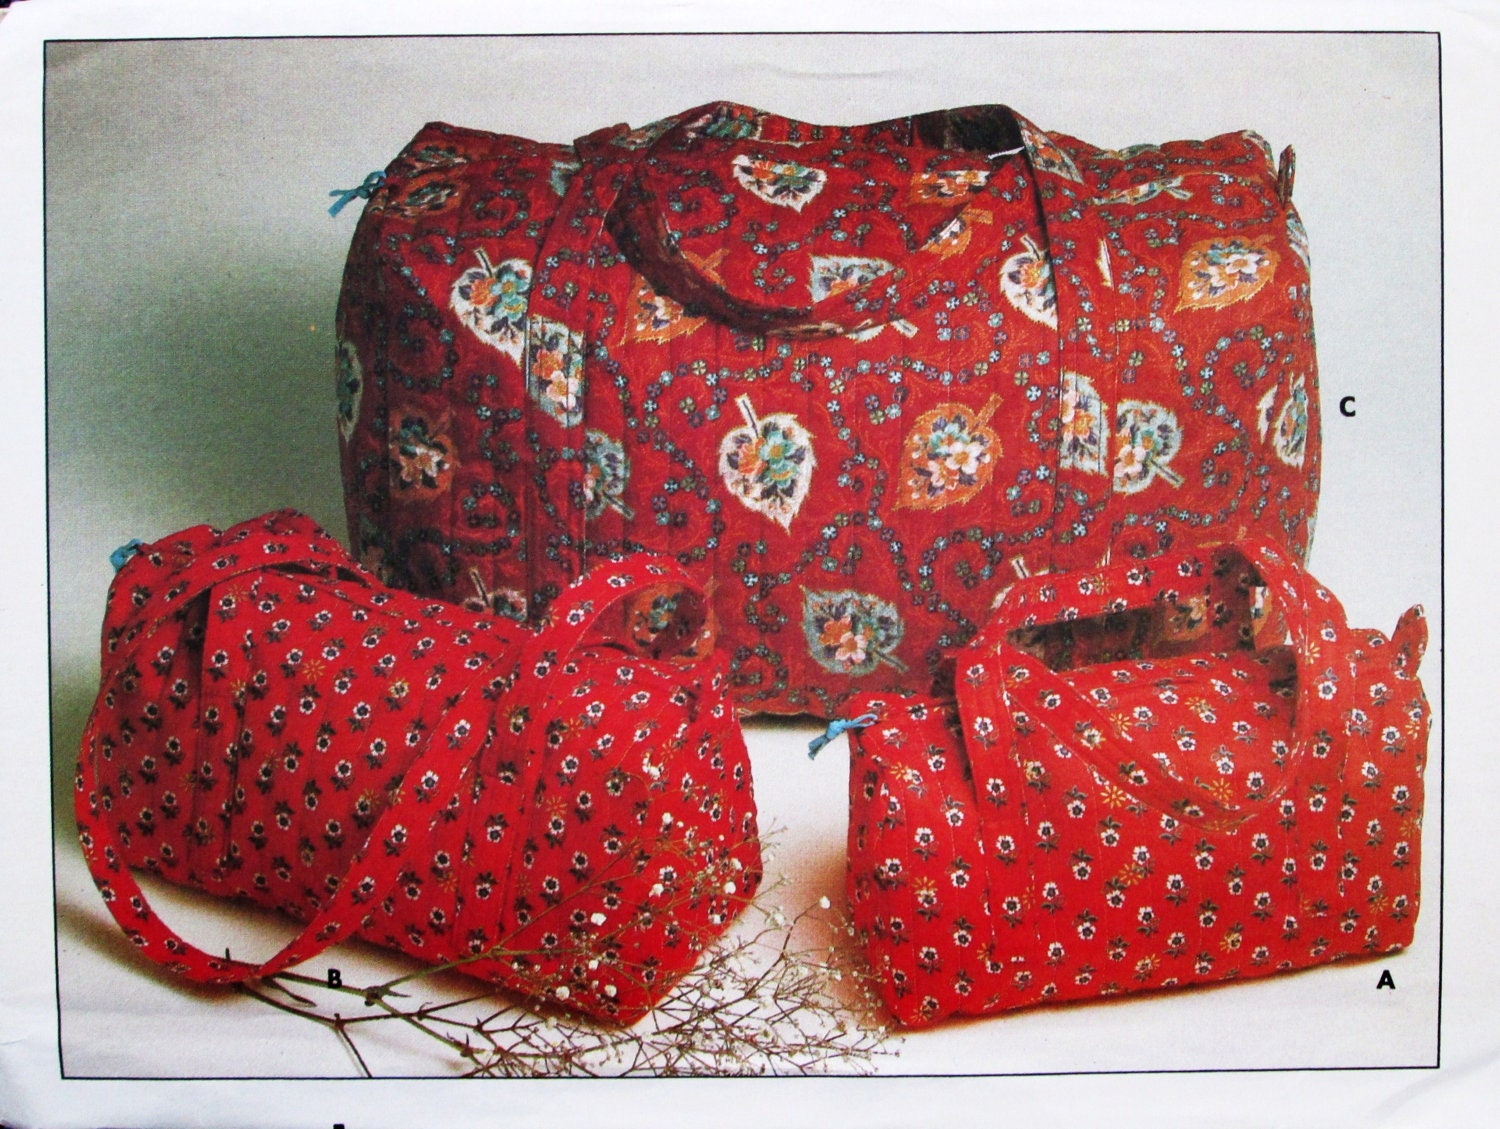 ... bag - quilted bag - carry on bag - overnight - travel - Vera Bradley